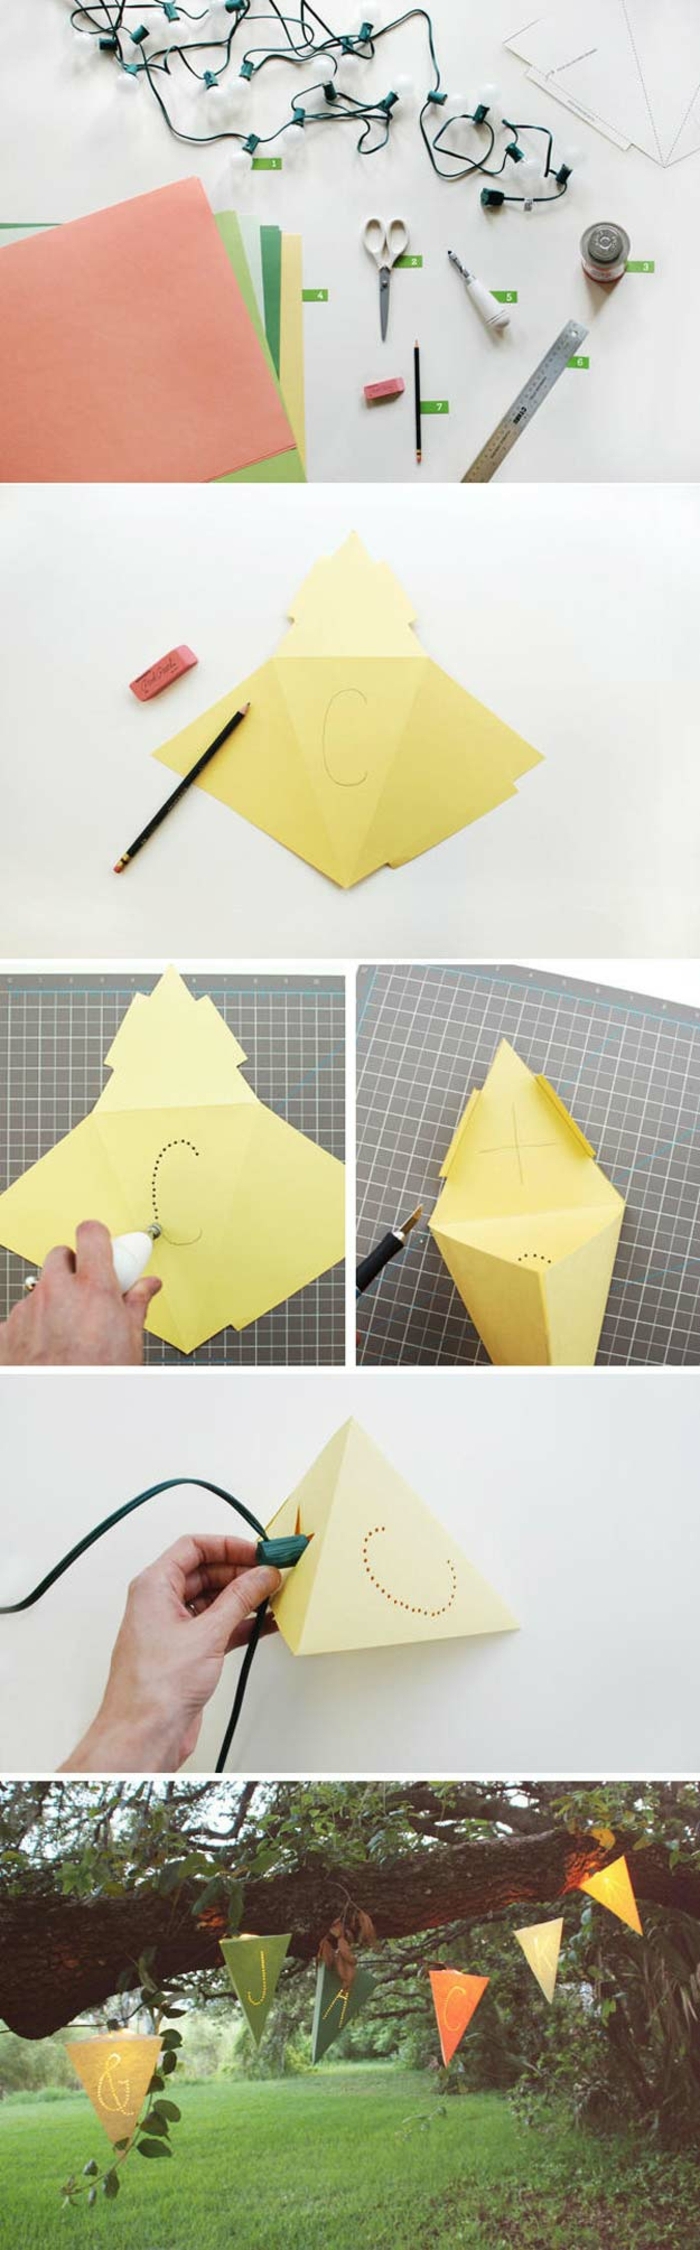 suspension origami, décoration pour une fête, guirlande lumineuse, tuto origami